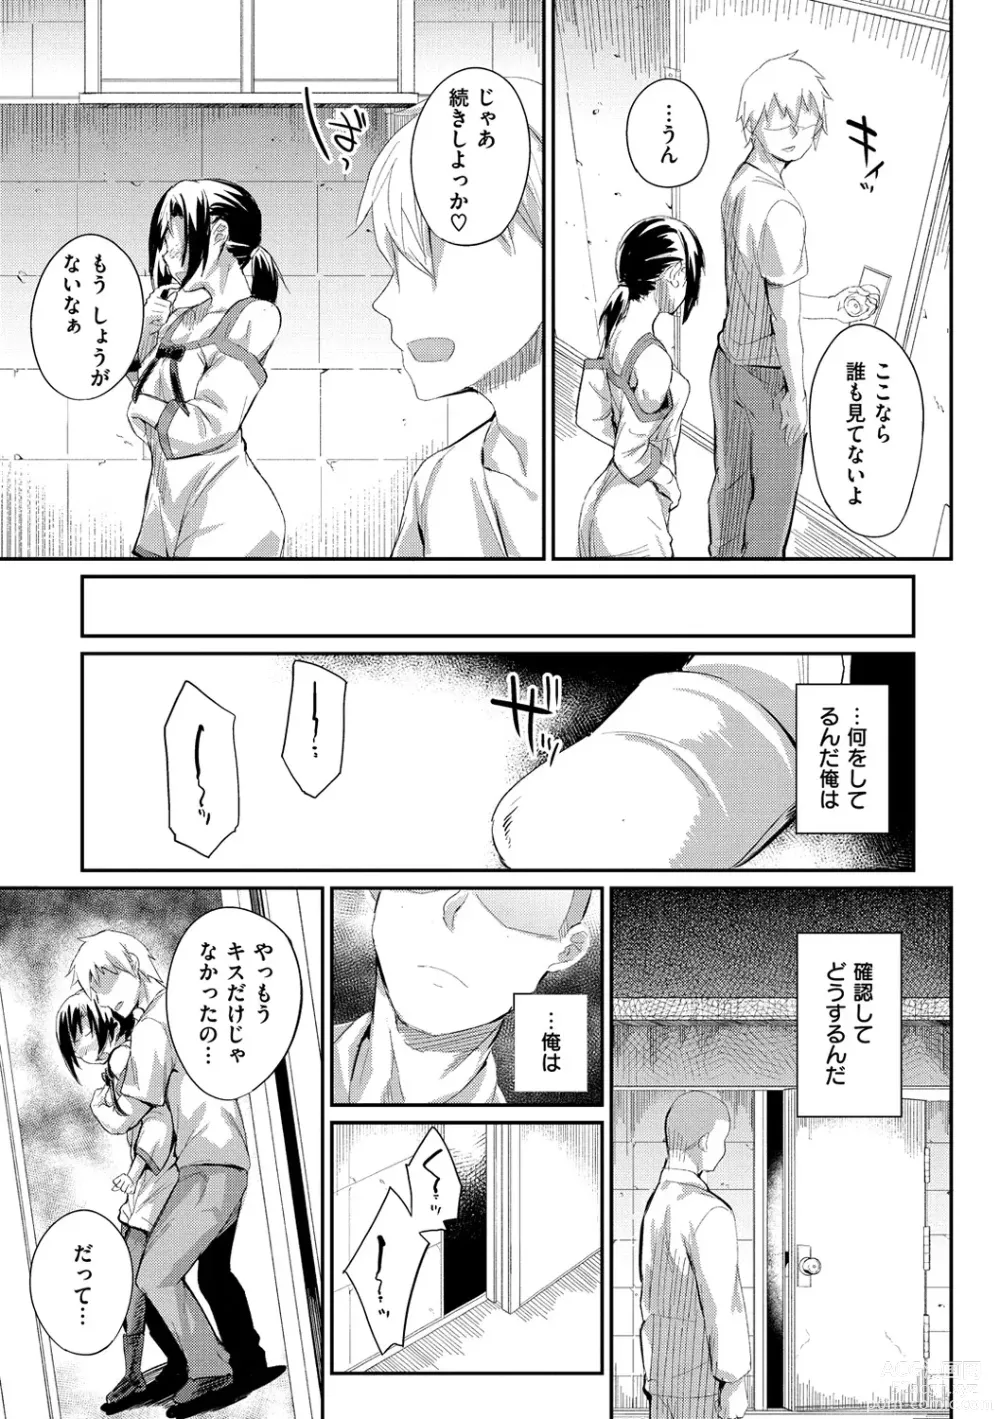 Page 190 of manga Himitsu no Decoration